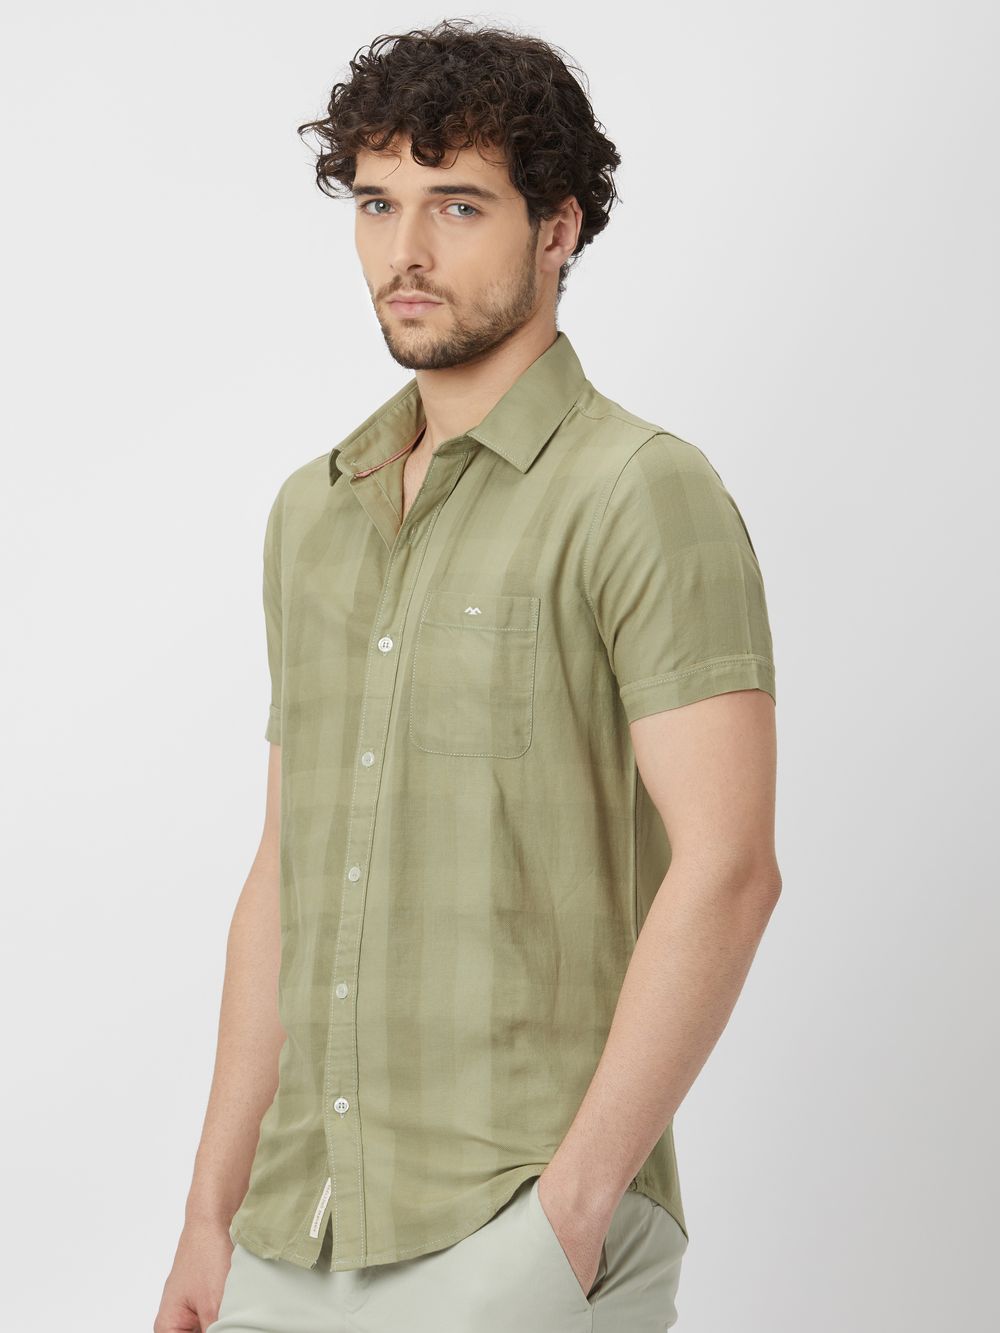 Light Olive Textured Plain Shirt